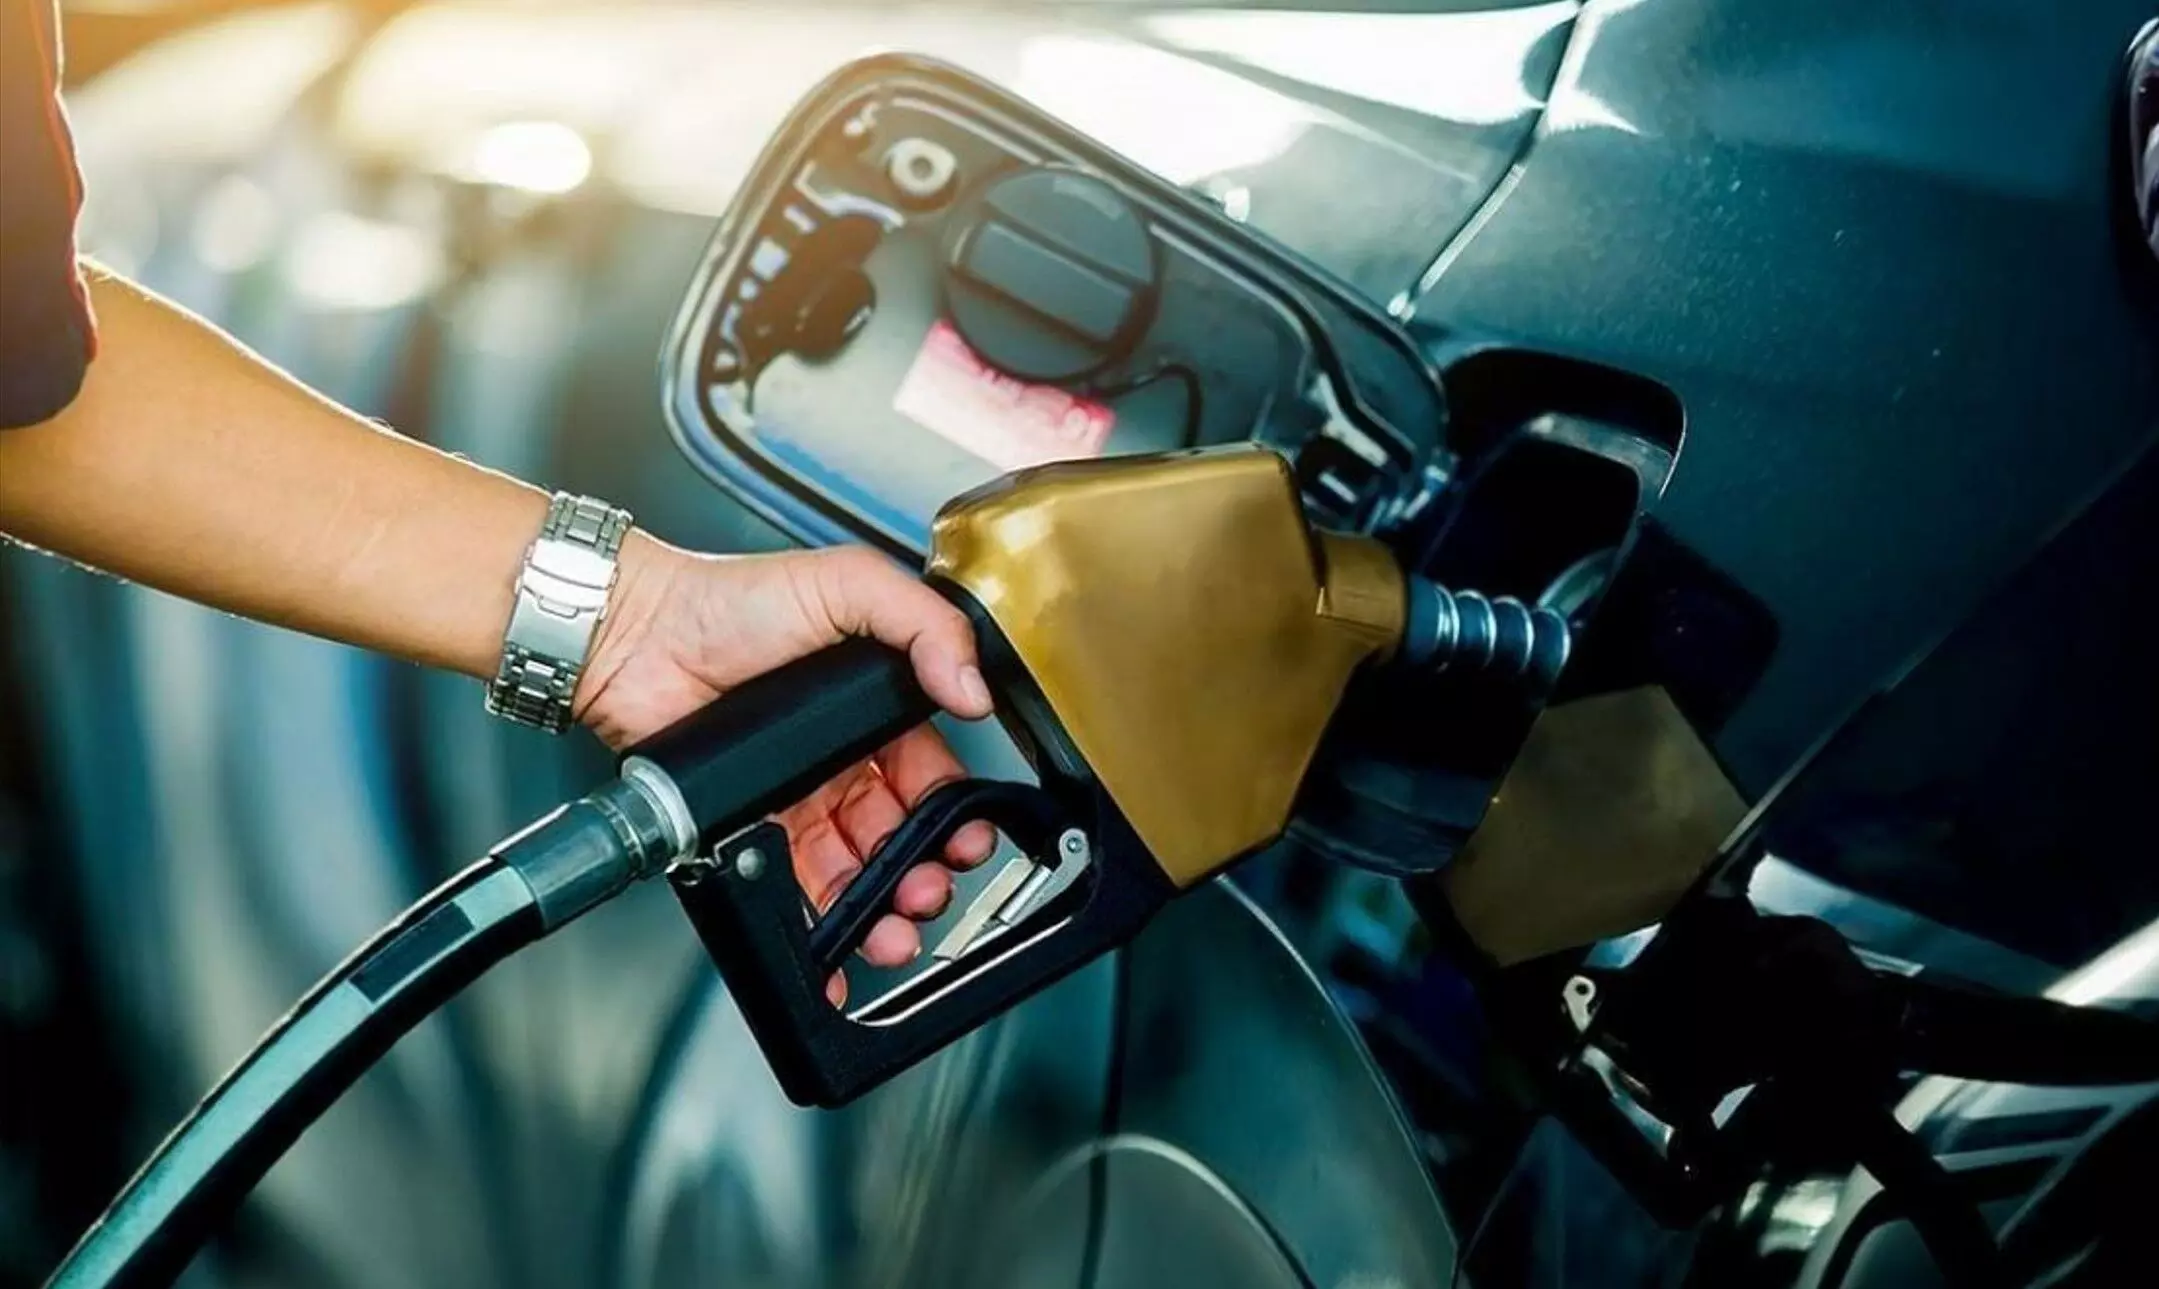 उधर कच्चे तेल का बढ़ा दाम, इधर चंद दिनों में ₹20 लीटर डीजल की बढ़ी कीमत-On the other hand, the price of crude oil increased, on the other hand, the price of diesel increased by ₹ 20 liter in a few days.